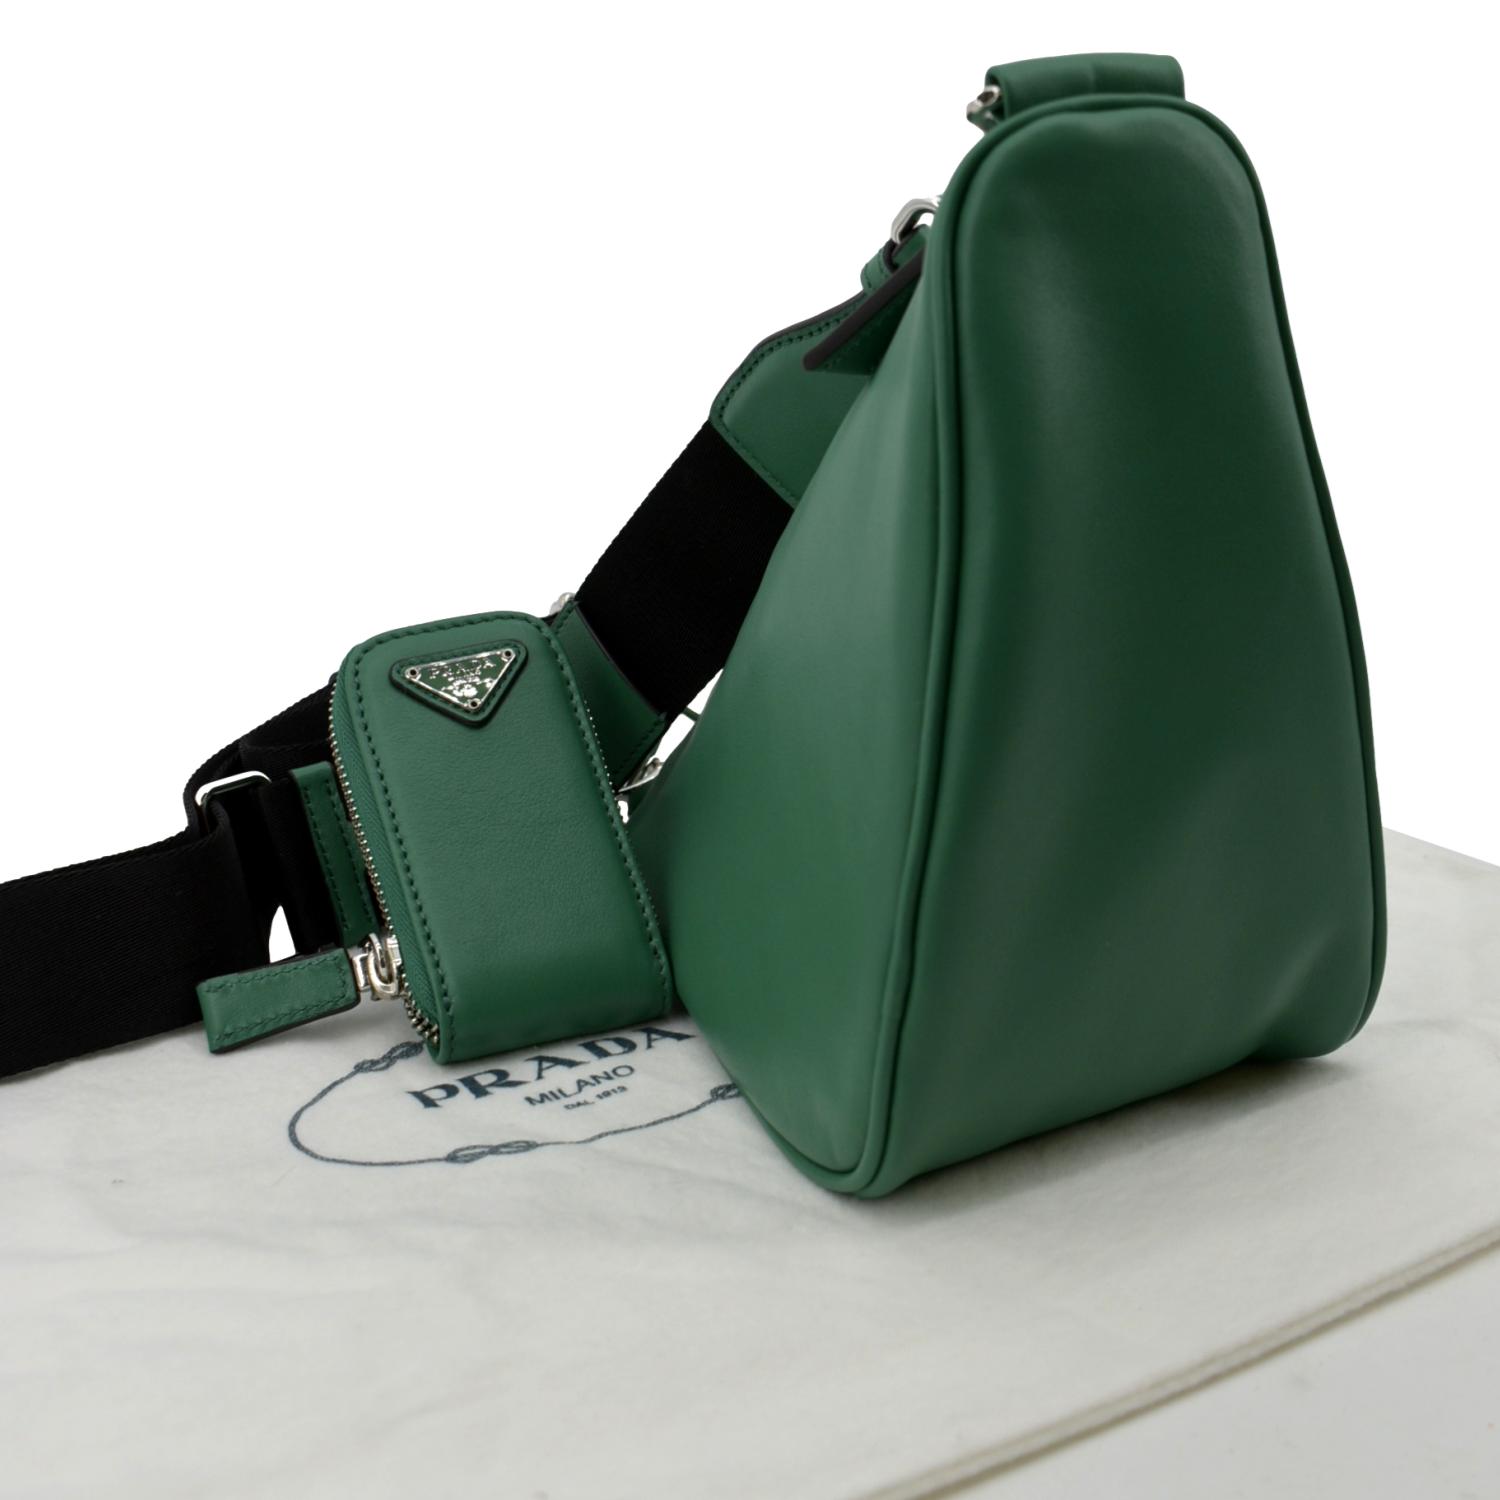 Prada Leather Prada Triangle Cross-Body Bag